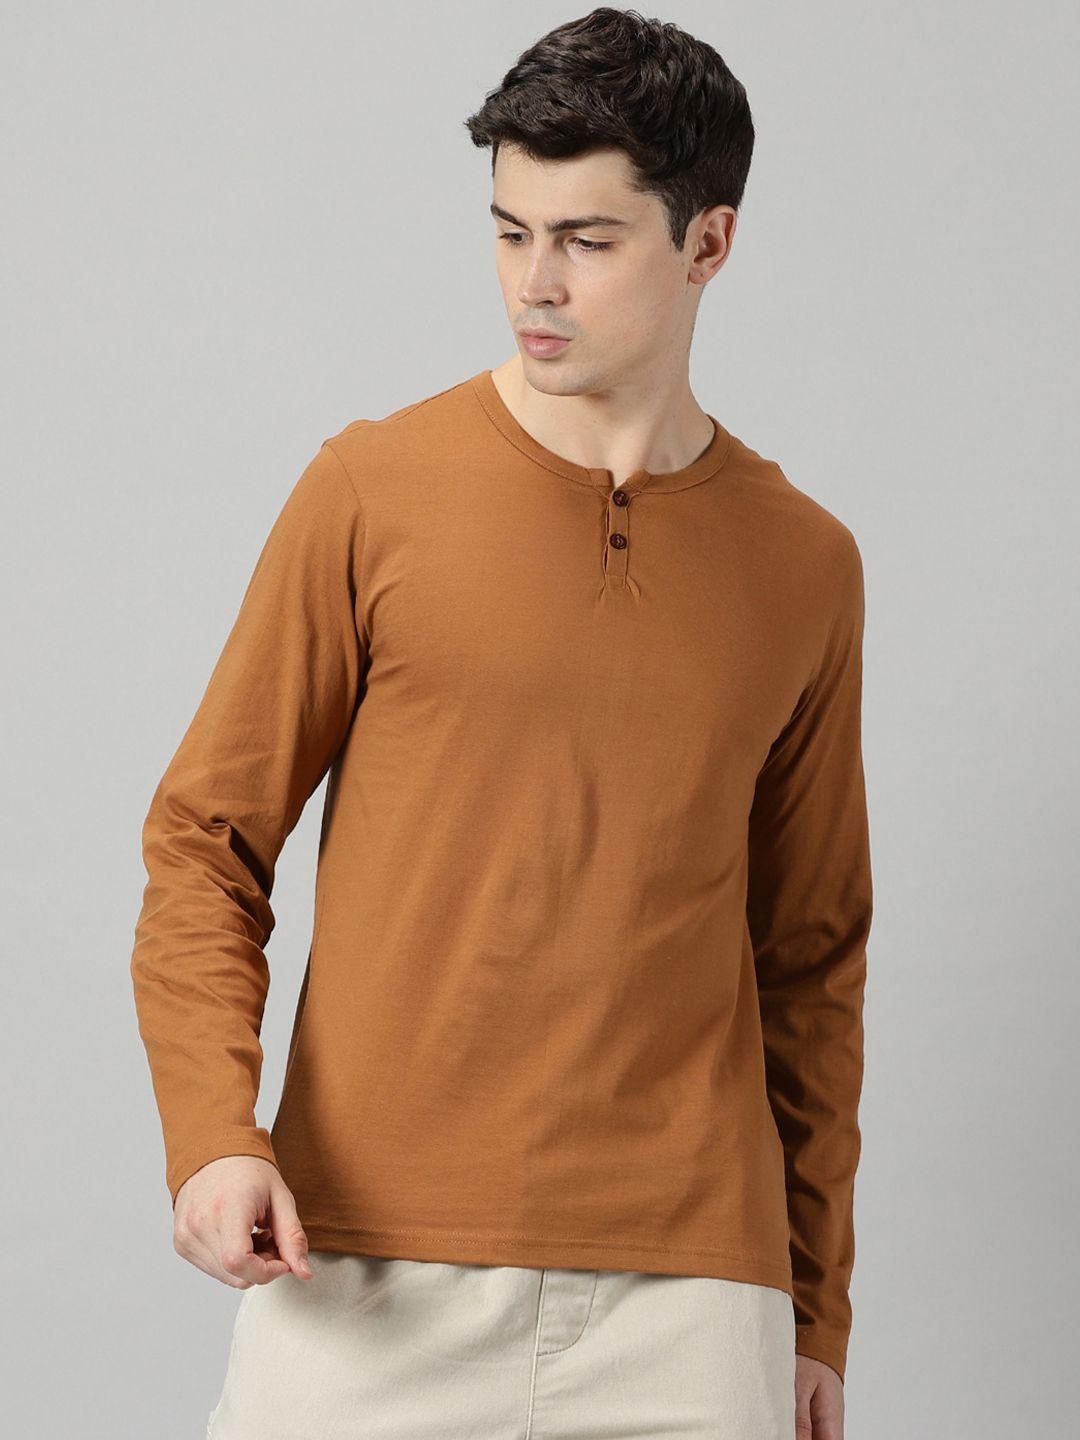 the hollander henley neck long sleeves cotton t-shirt